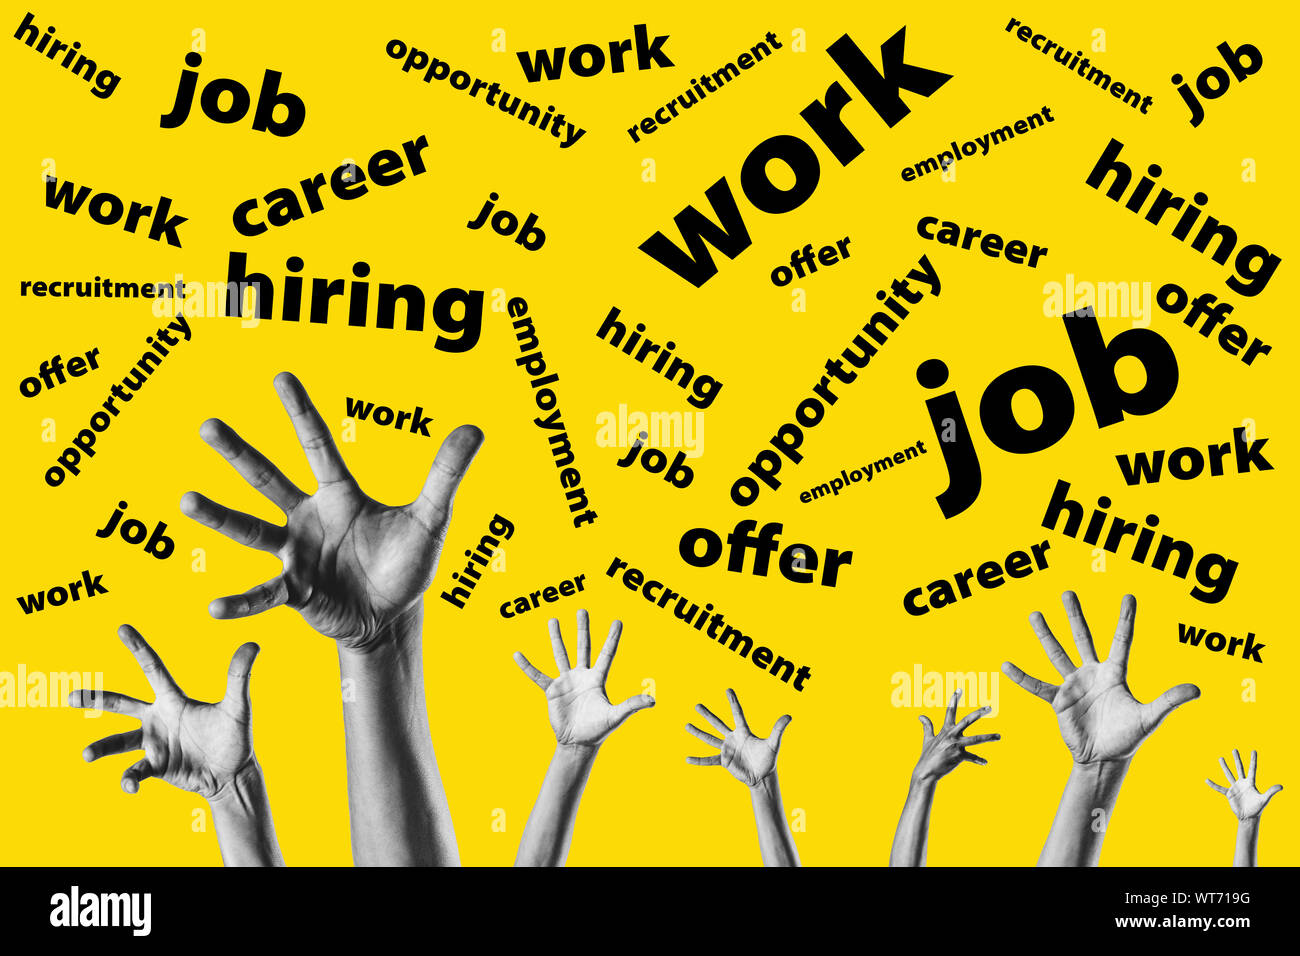 Job opportunity jobs of graphic design